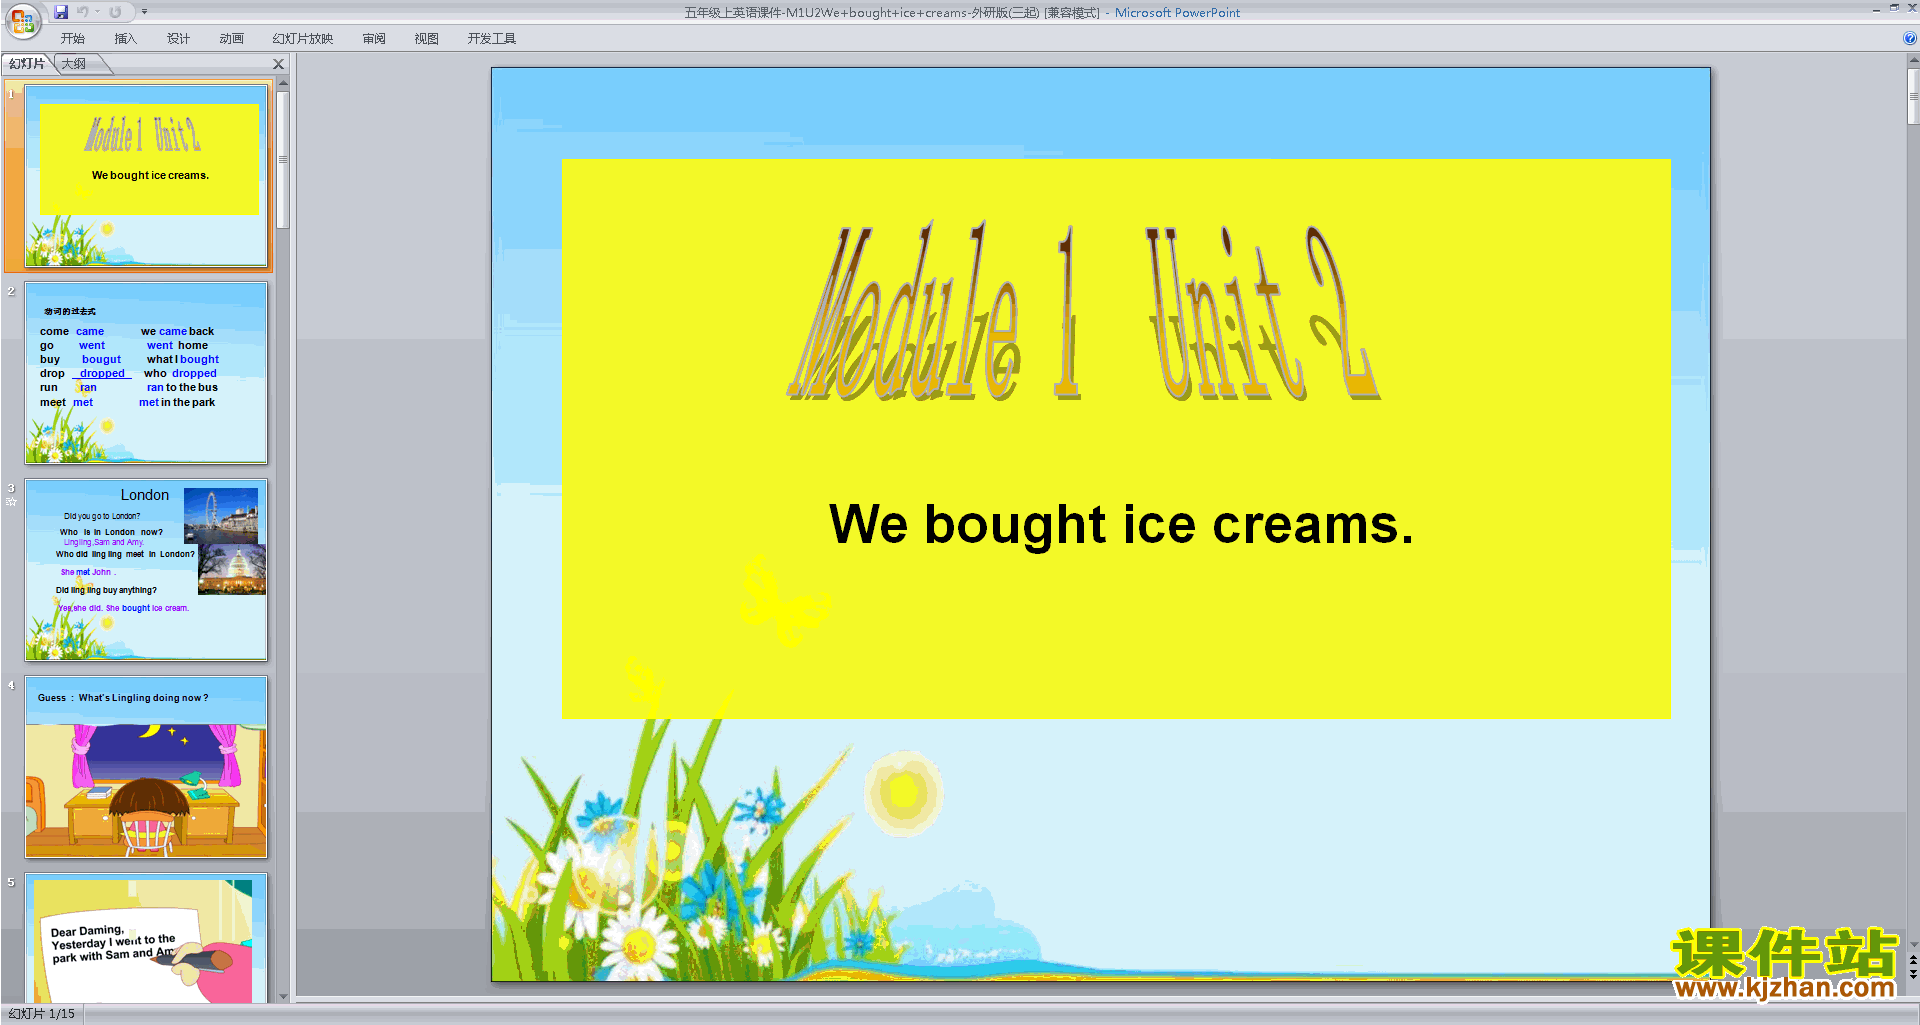 下载Module1 Unit2 We bought ice creamsppt课件18